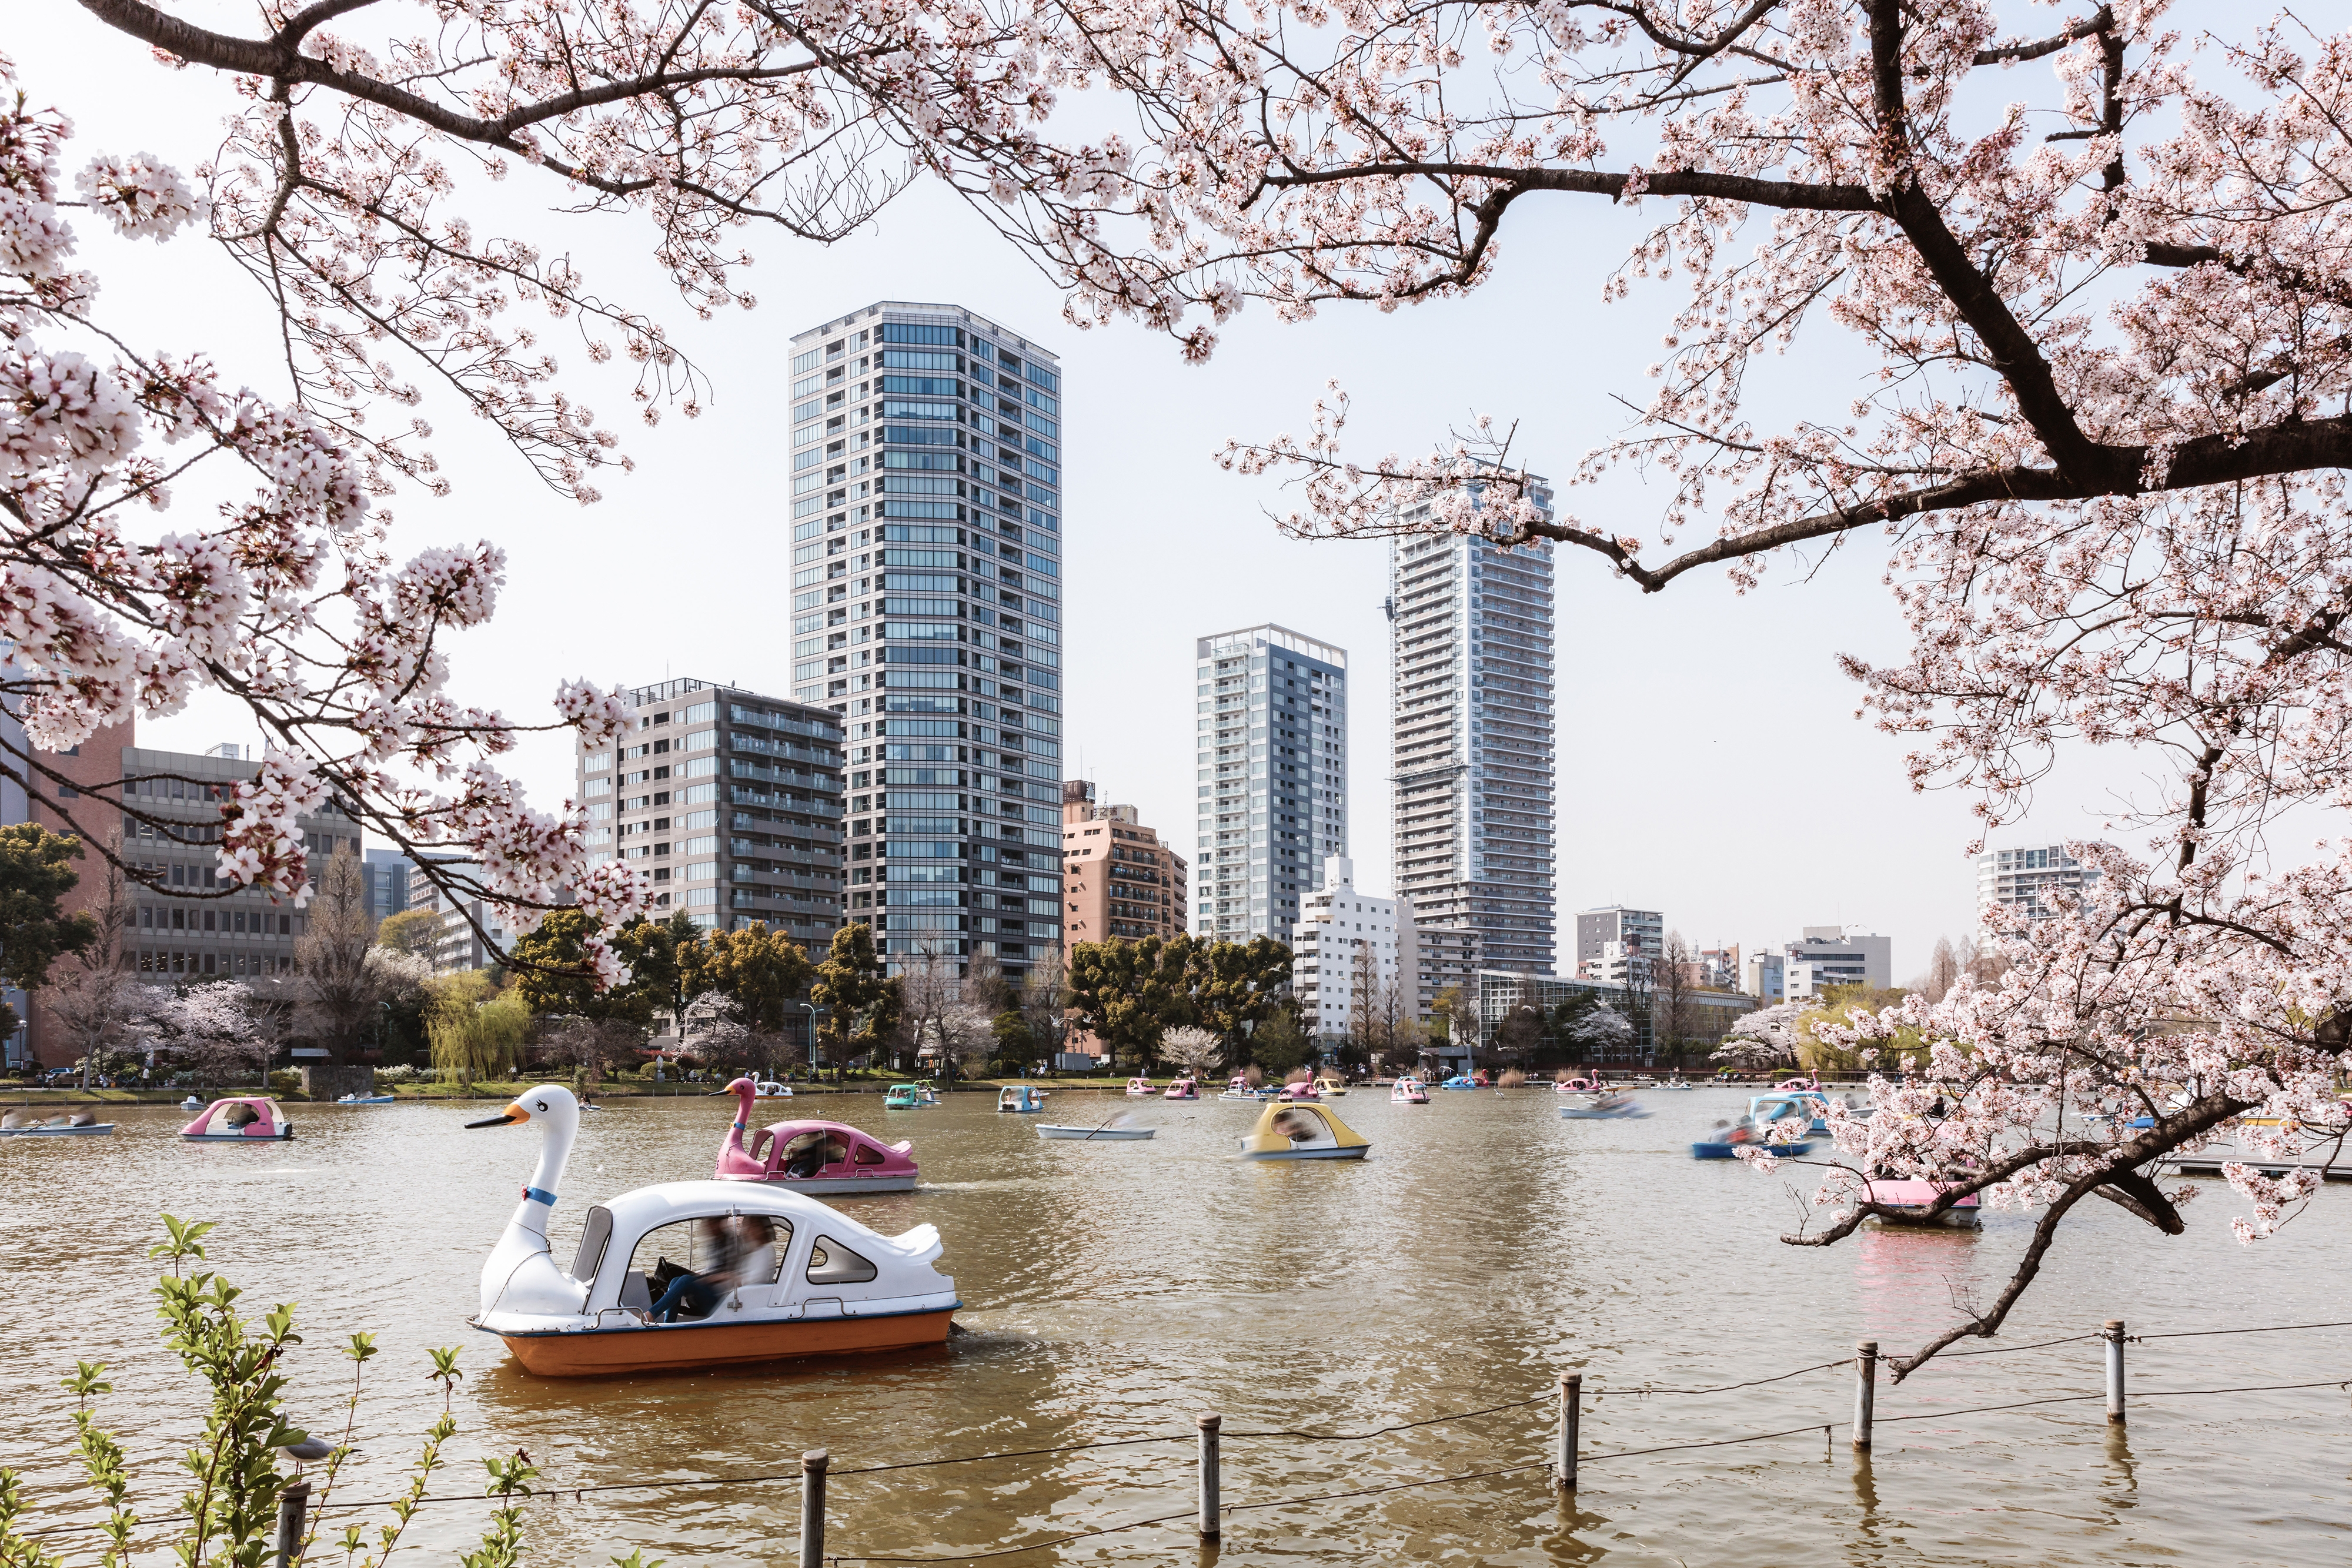 Experience Ueno's breathtaking cherry blossom season every spring